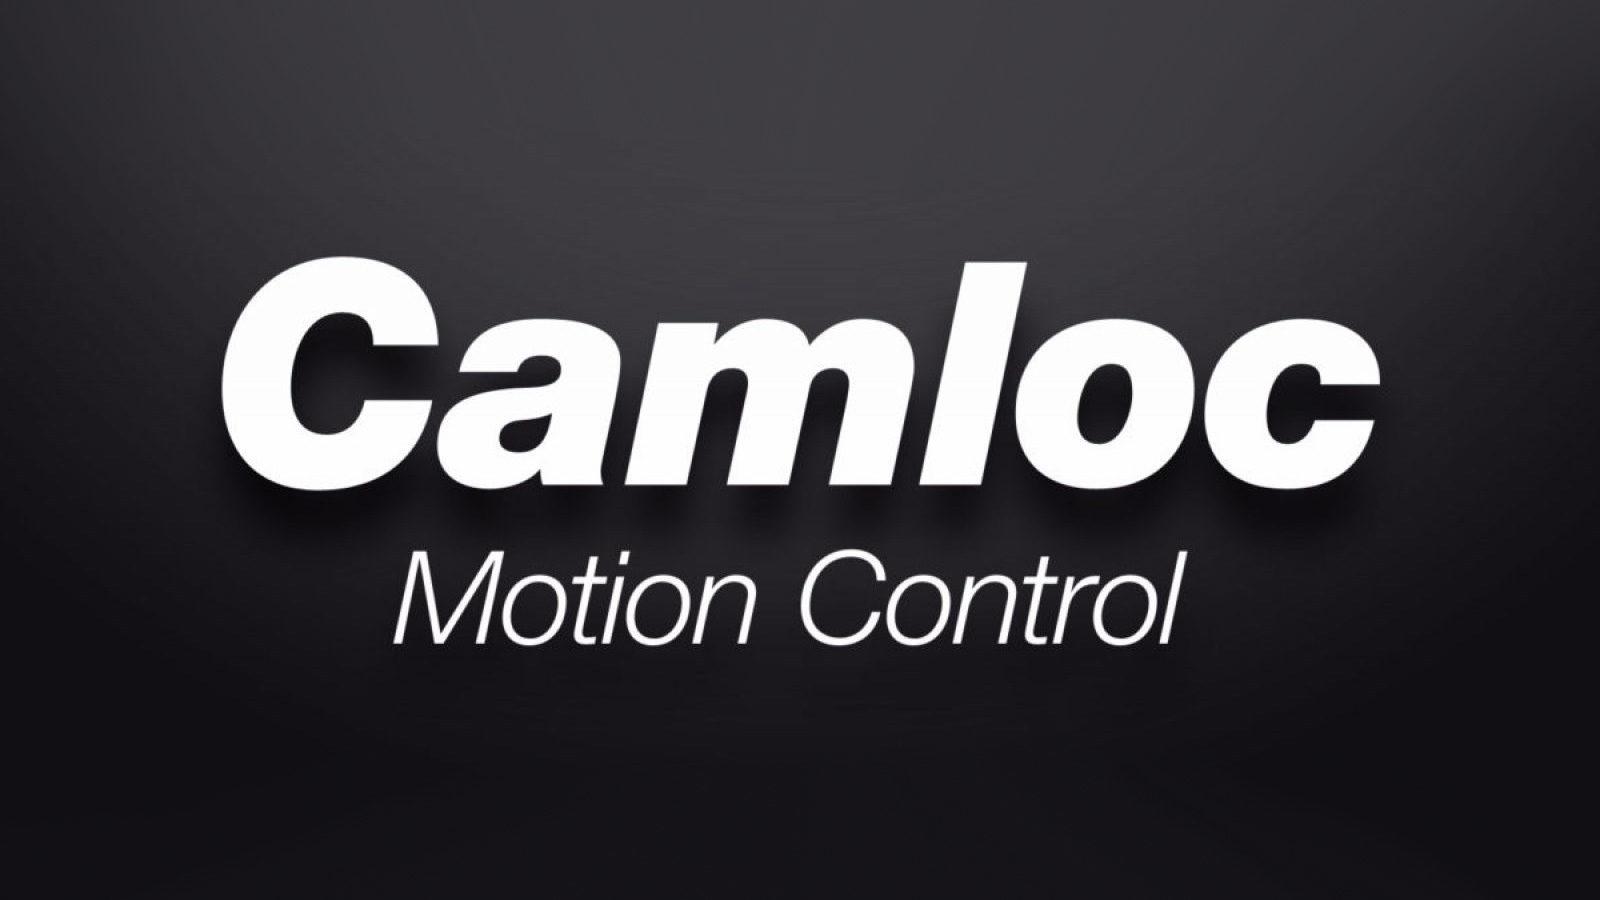 Camloc motion control logo